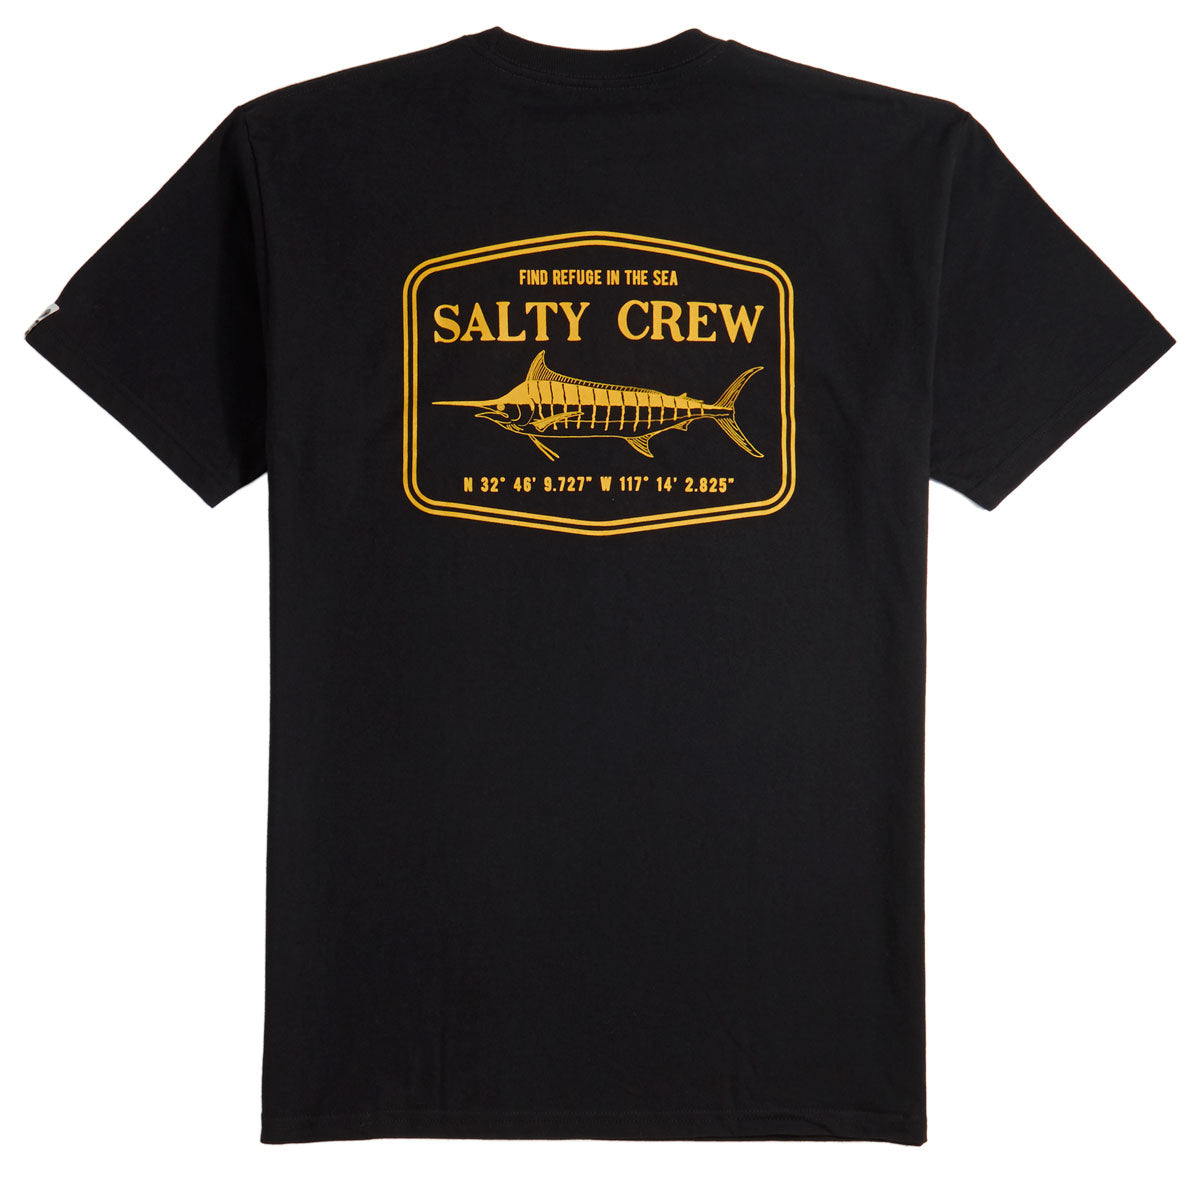 Salty Crew Stealth T-Shirt - Black image 2